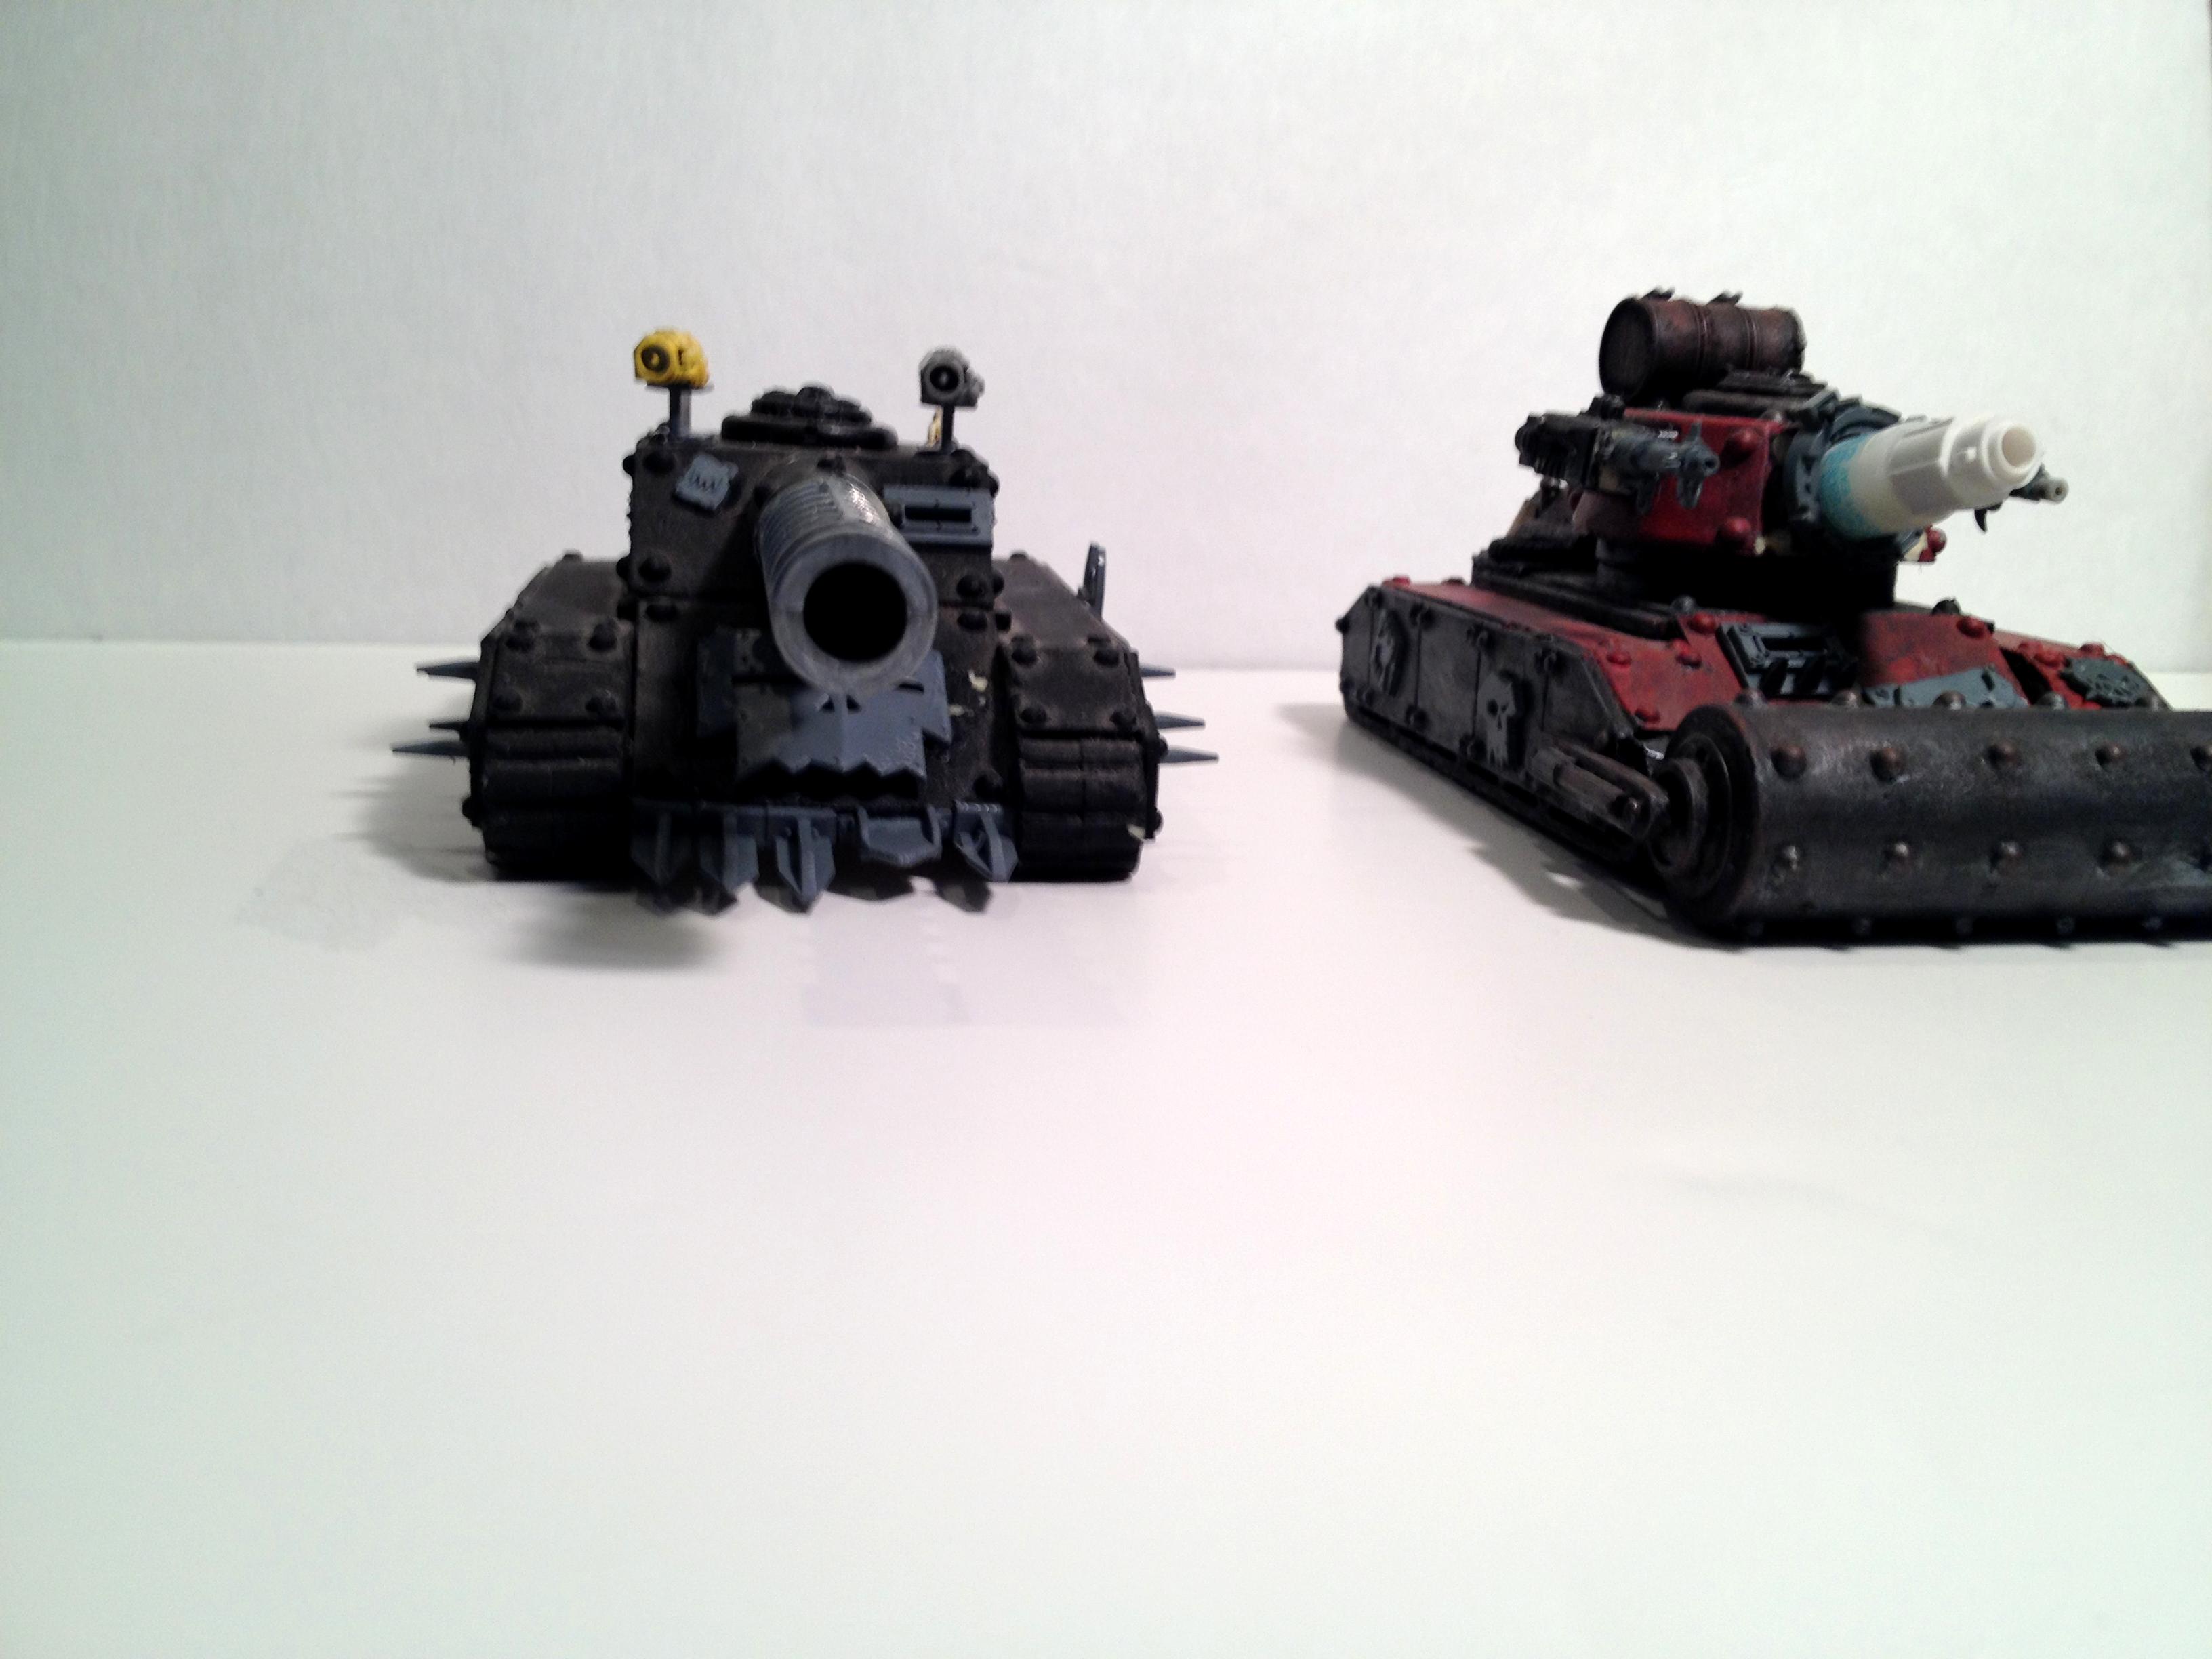 Ork tanks